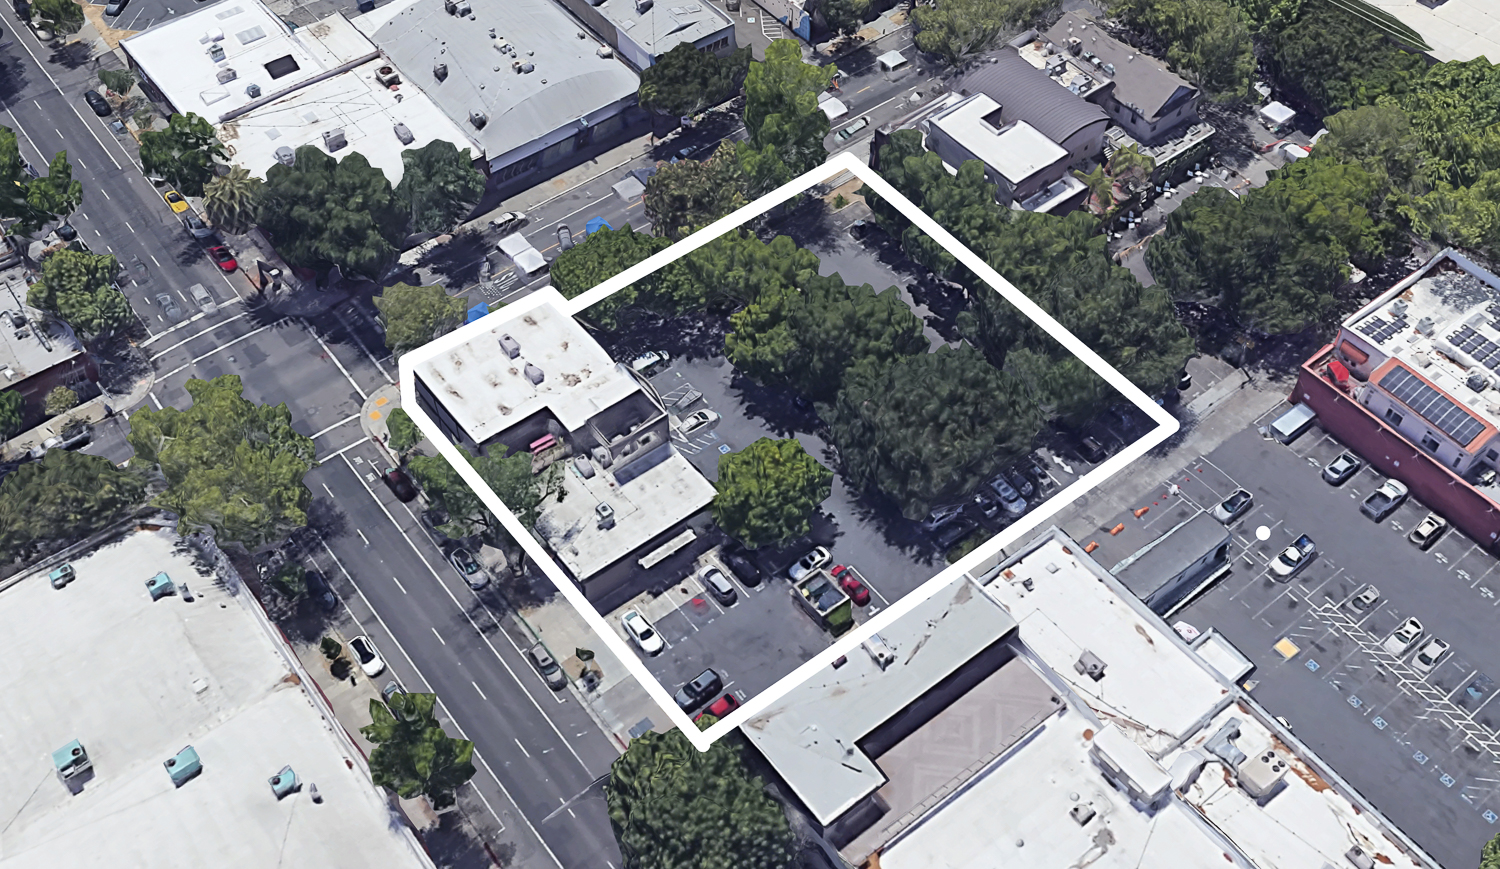 2031 K Street, image via Google Satellite